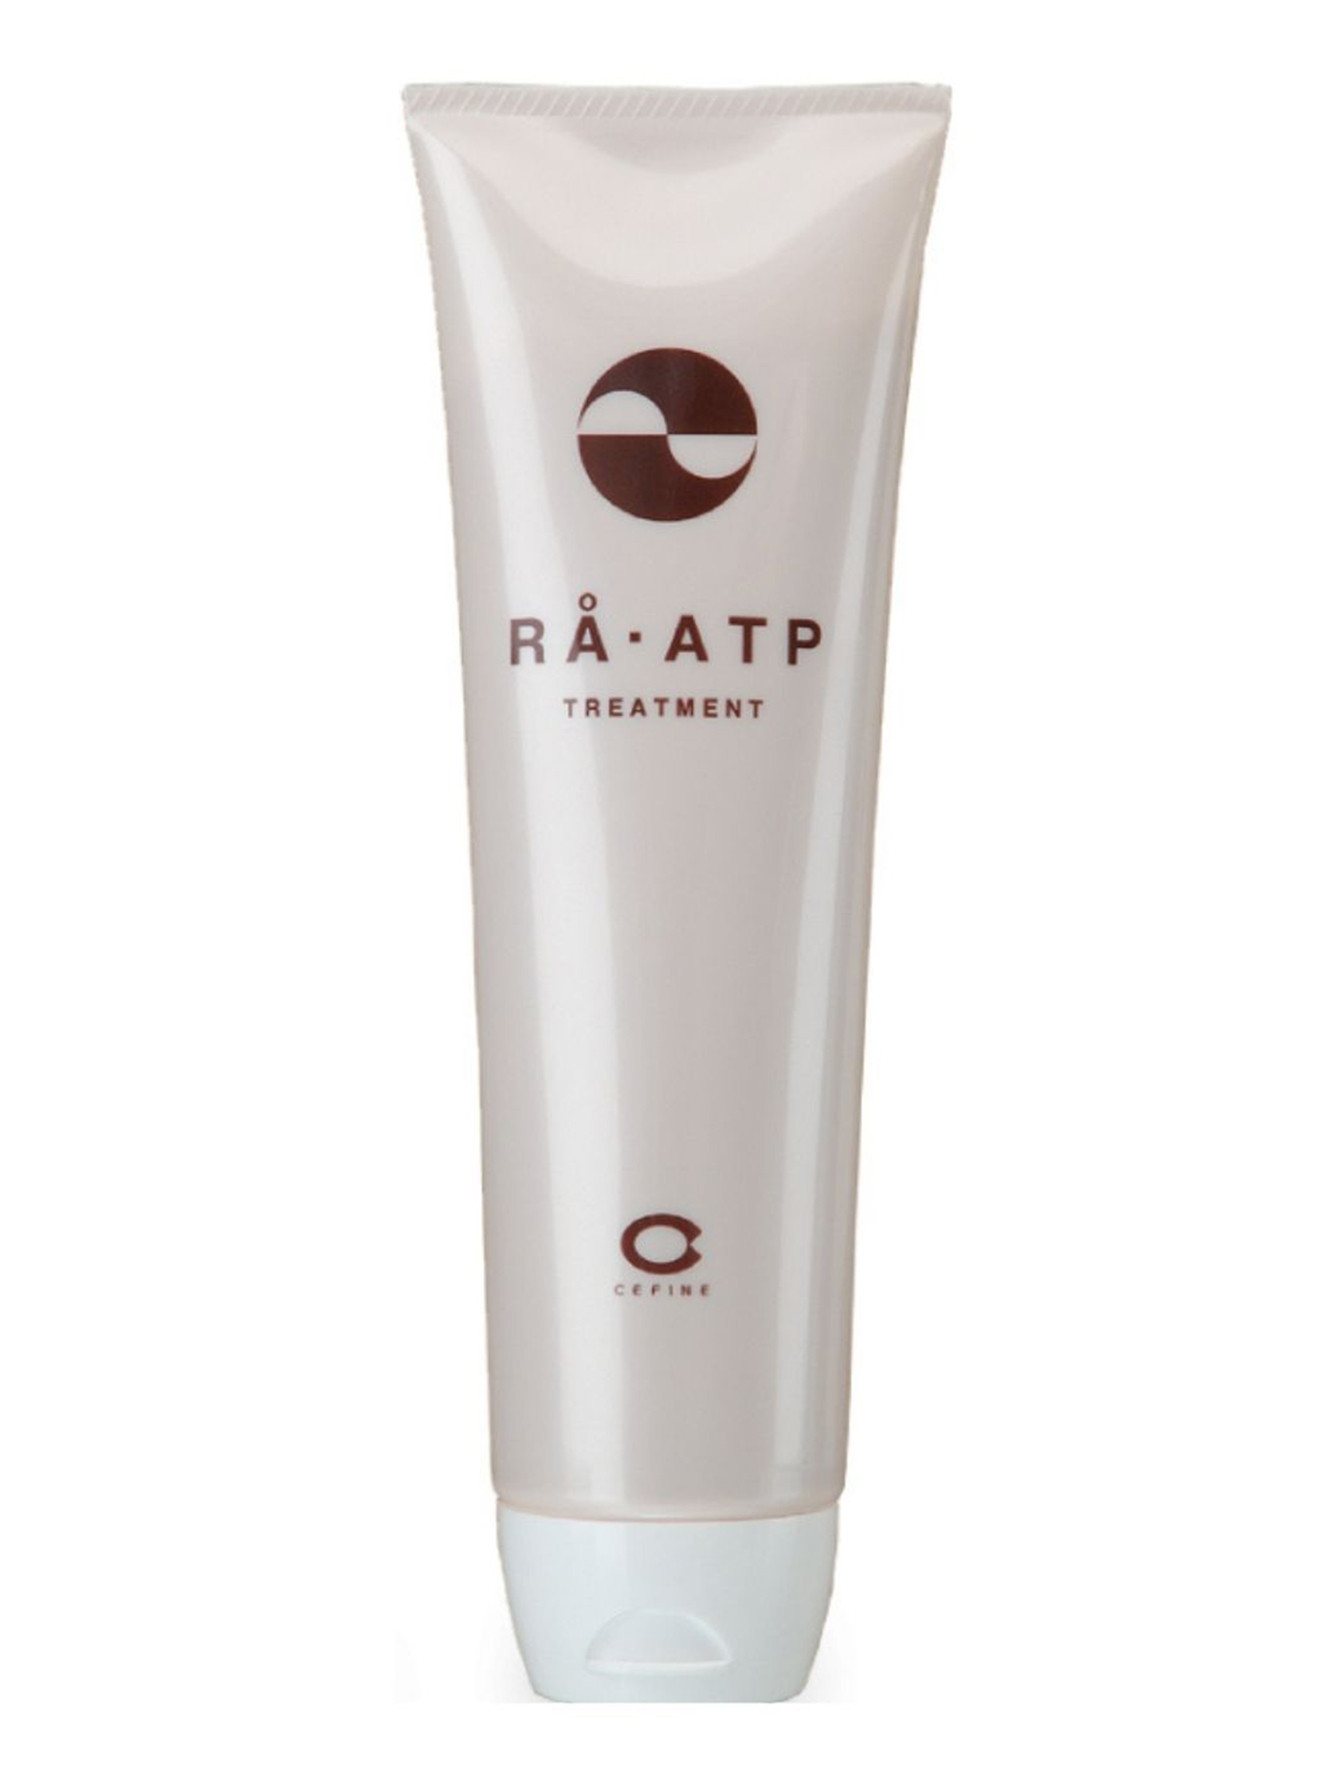  Восстанавливающая маска для волос - Ra Atp, 290ml - Общий вид